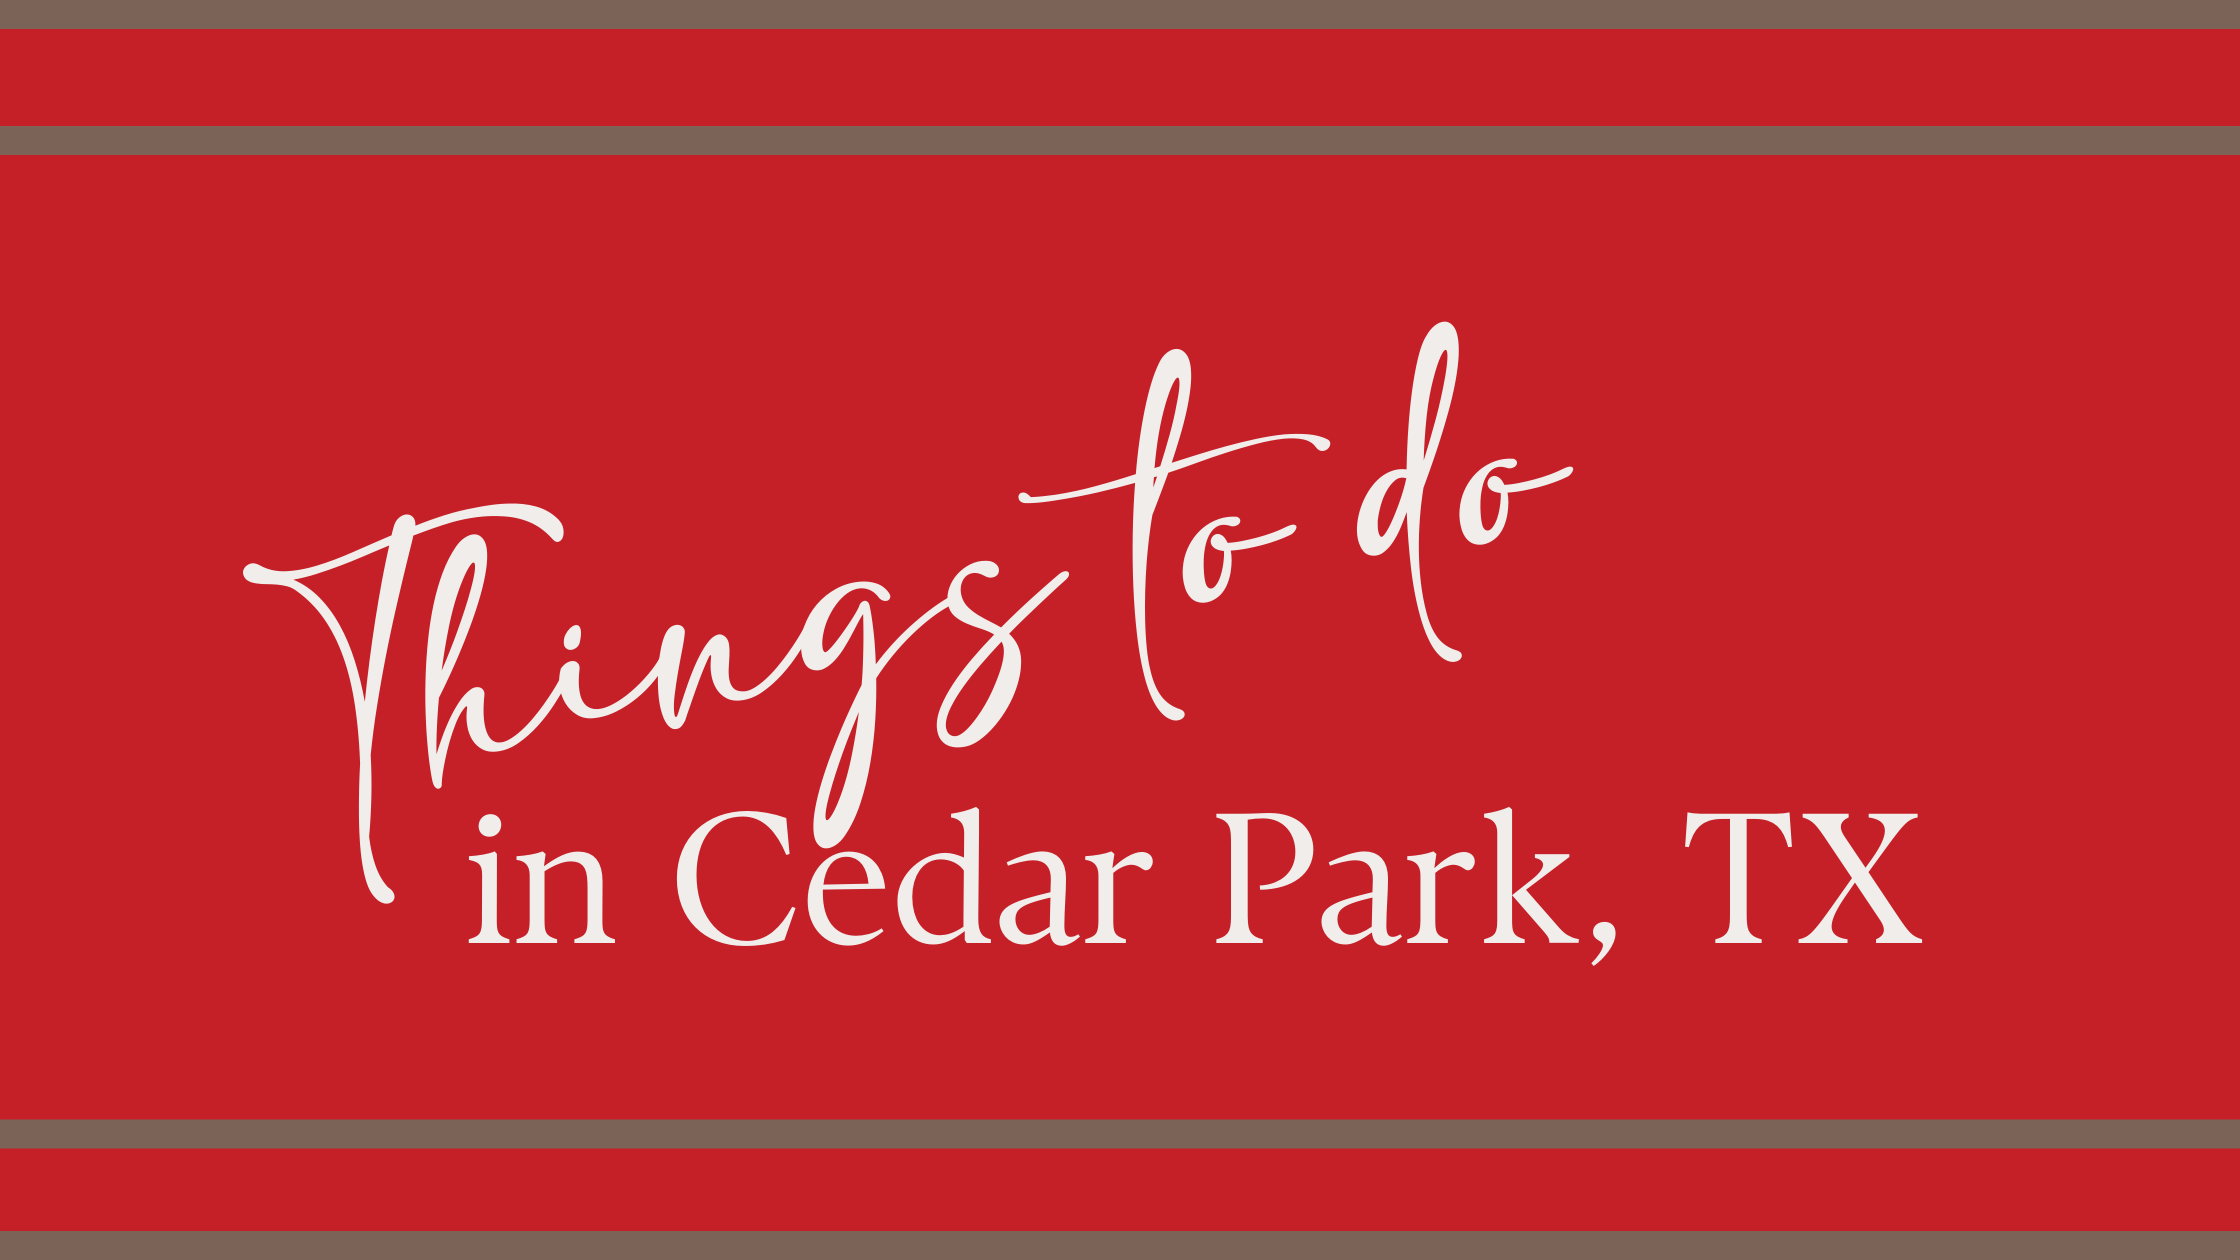 Things to do in Cedar Park, TX